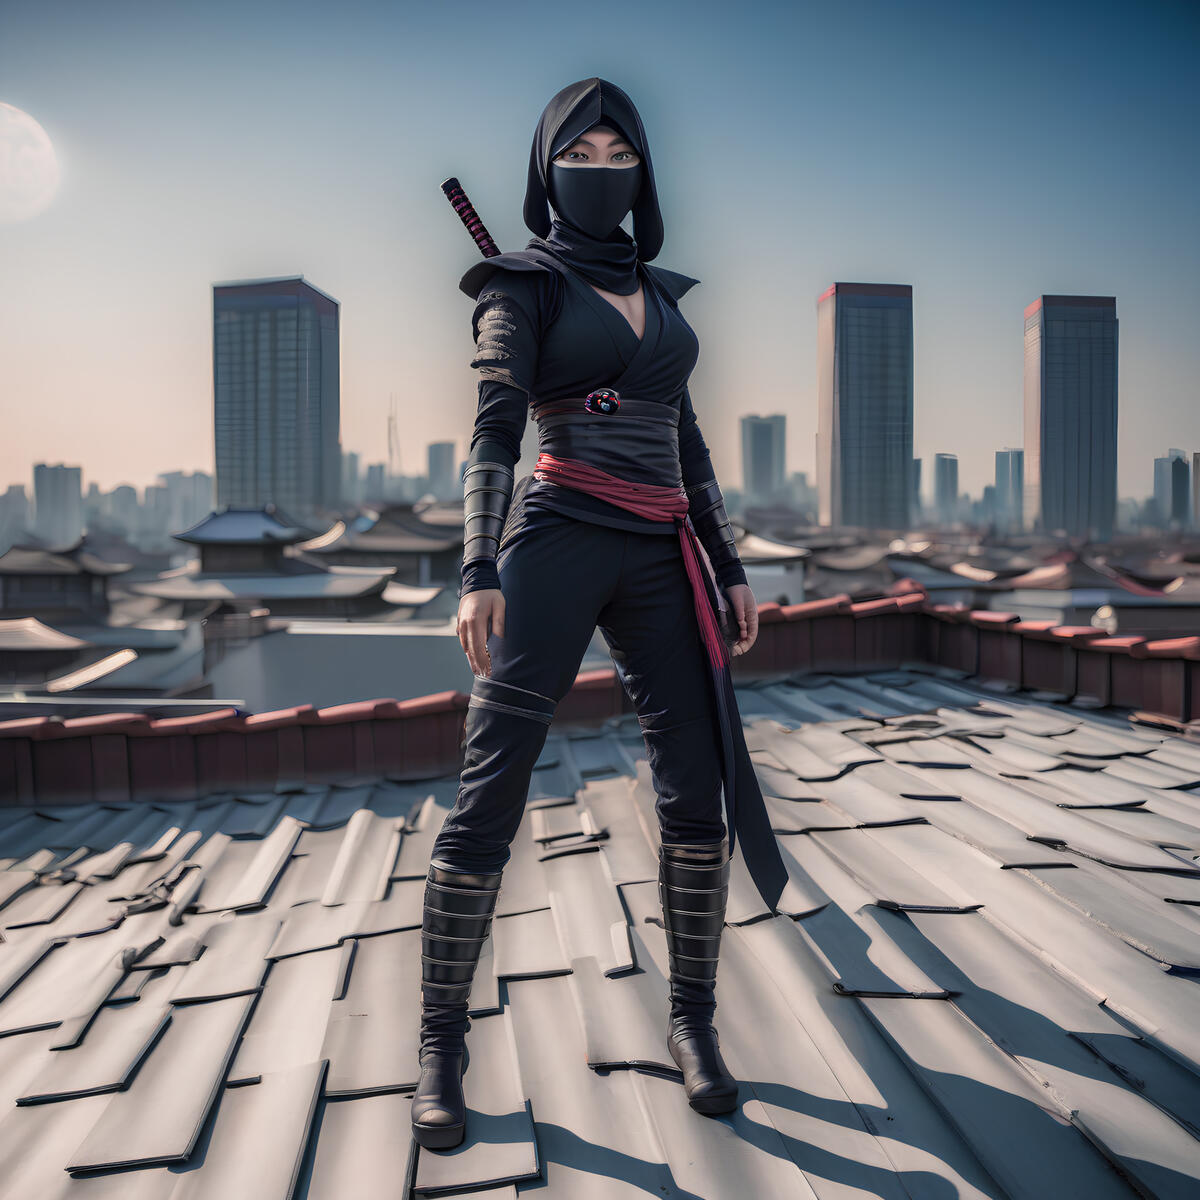 Ninja girl